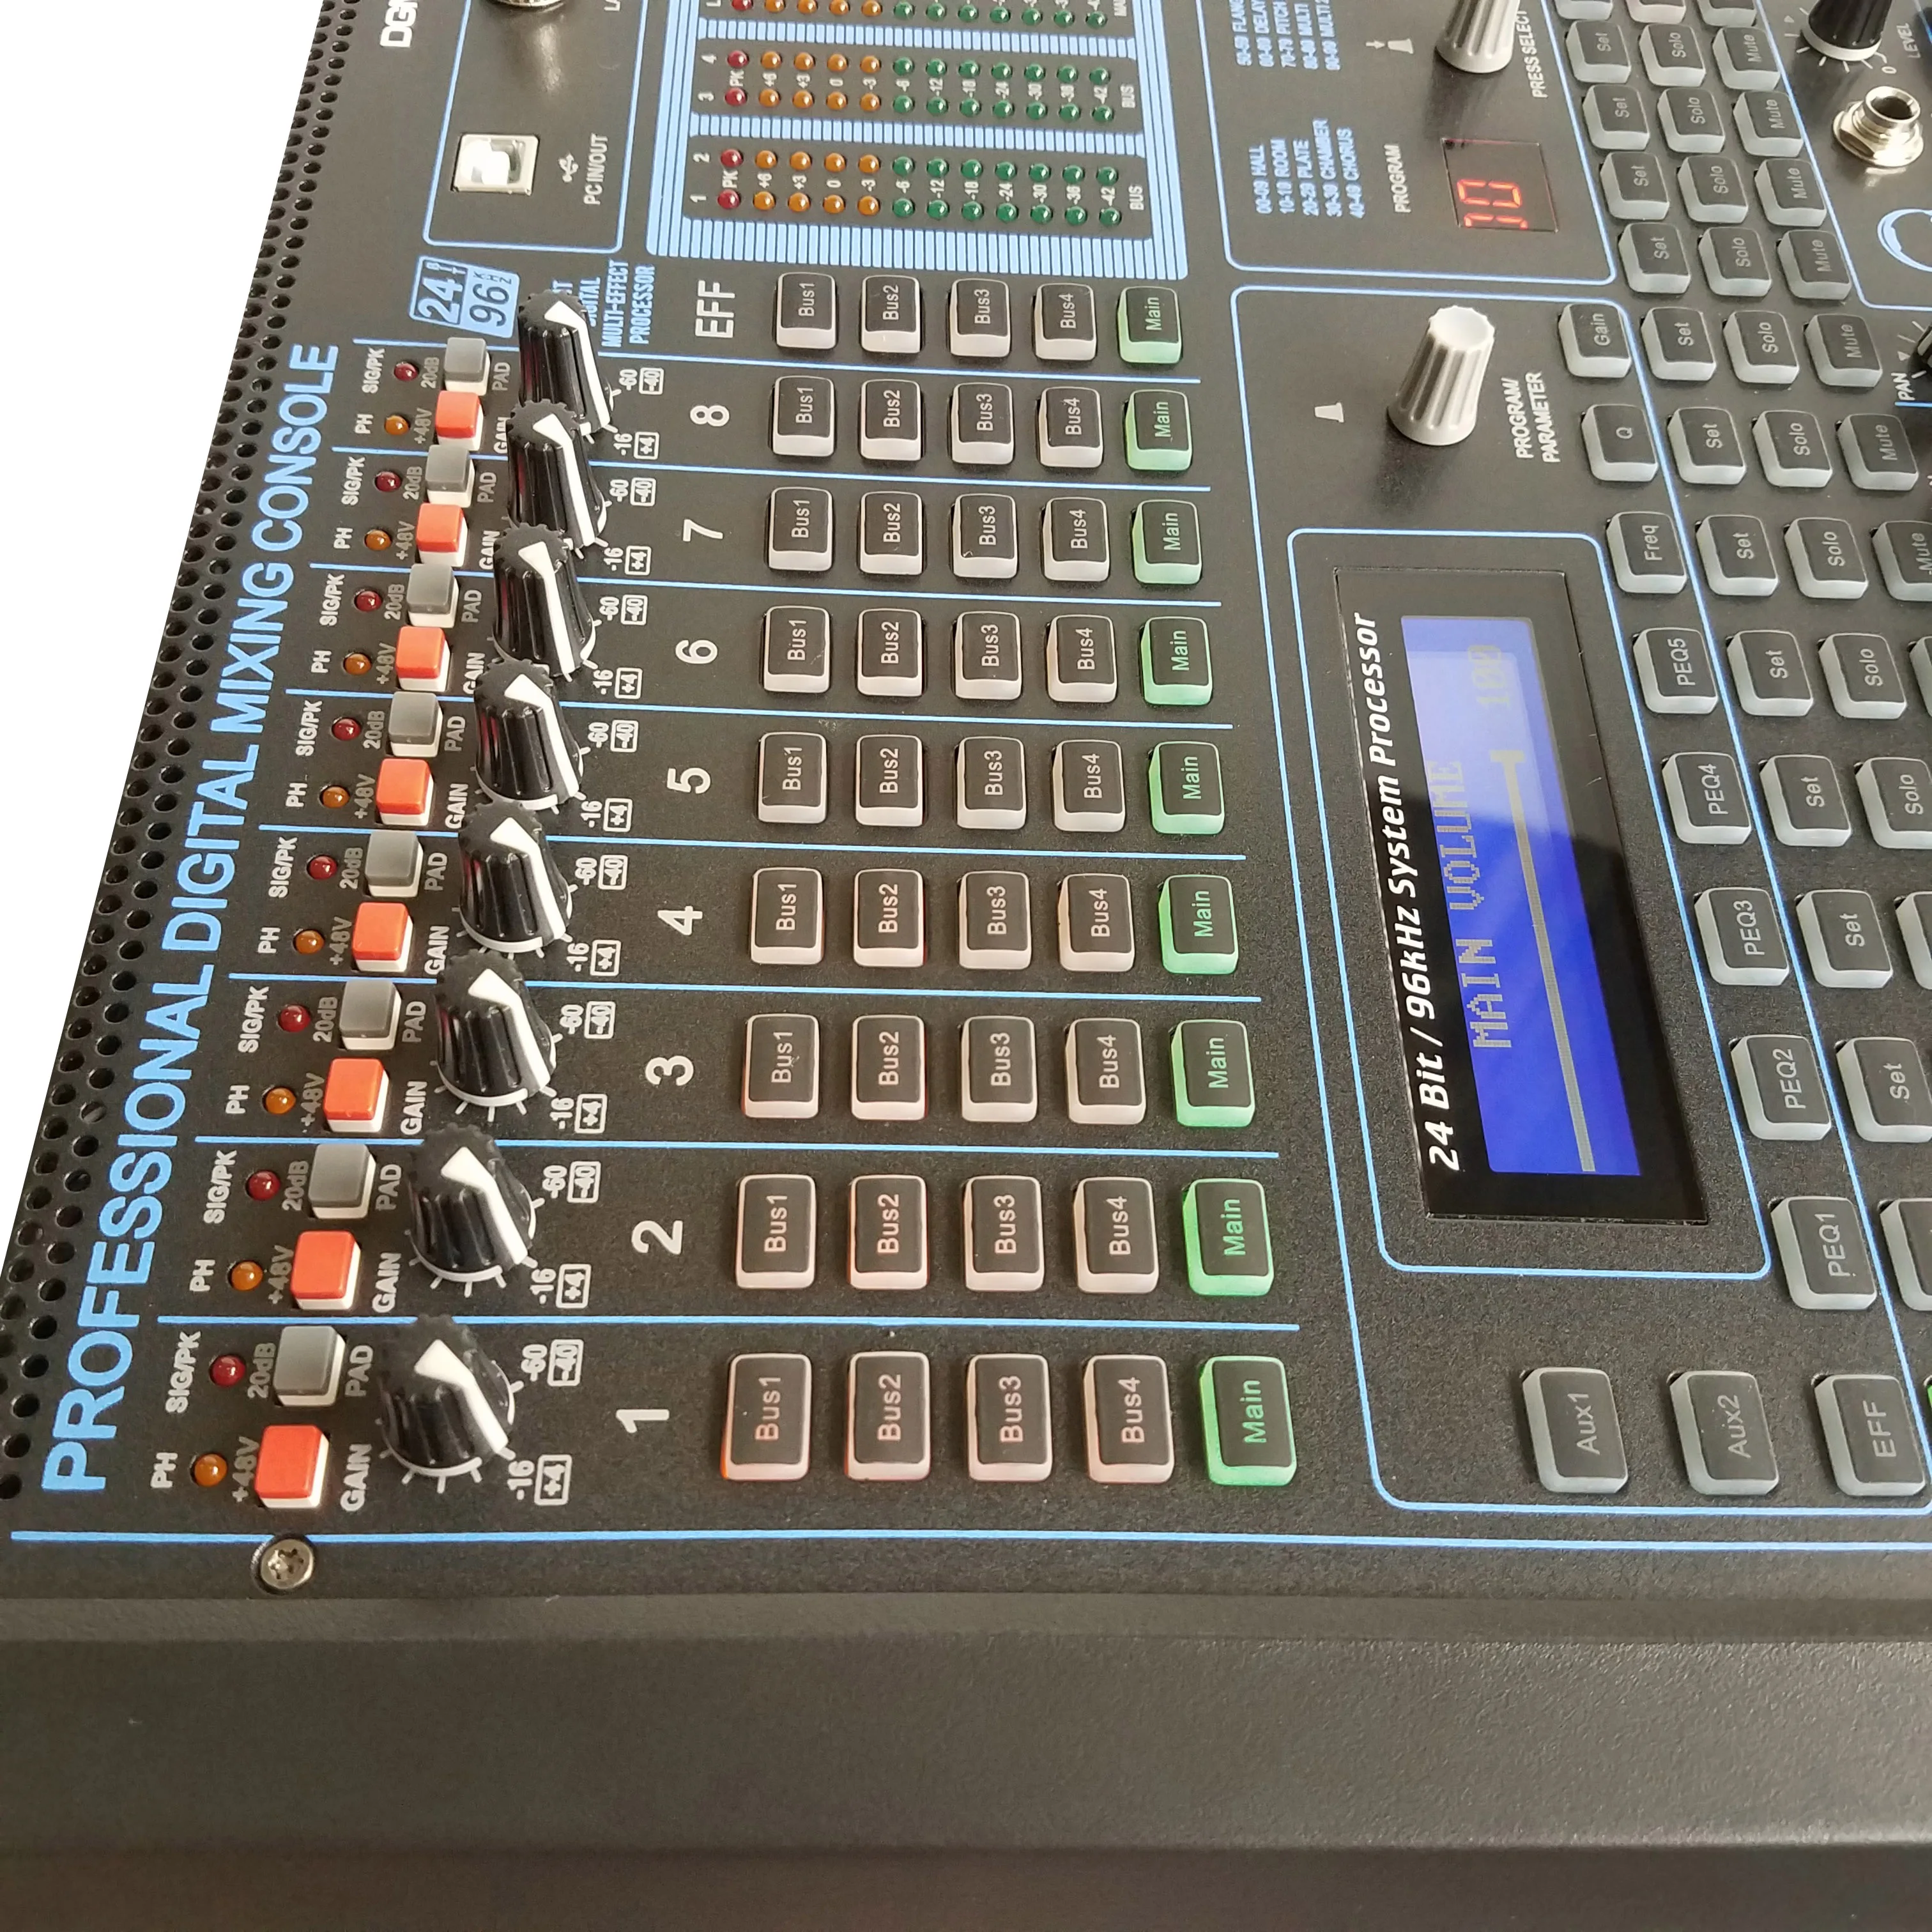 Leicozic 8-channel Mixers Professional Mixing Console Dj Dgm840 Audio 19inch Rackmount Mezcladores Digitales - Stage Audio AliExpress